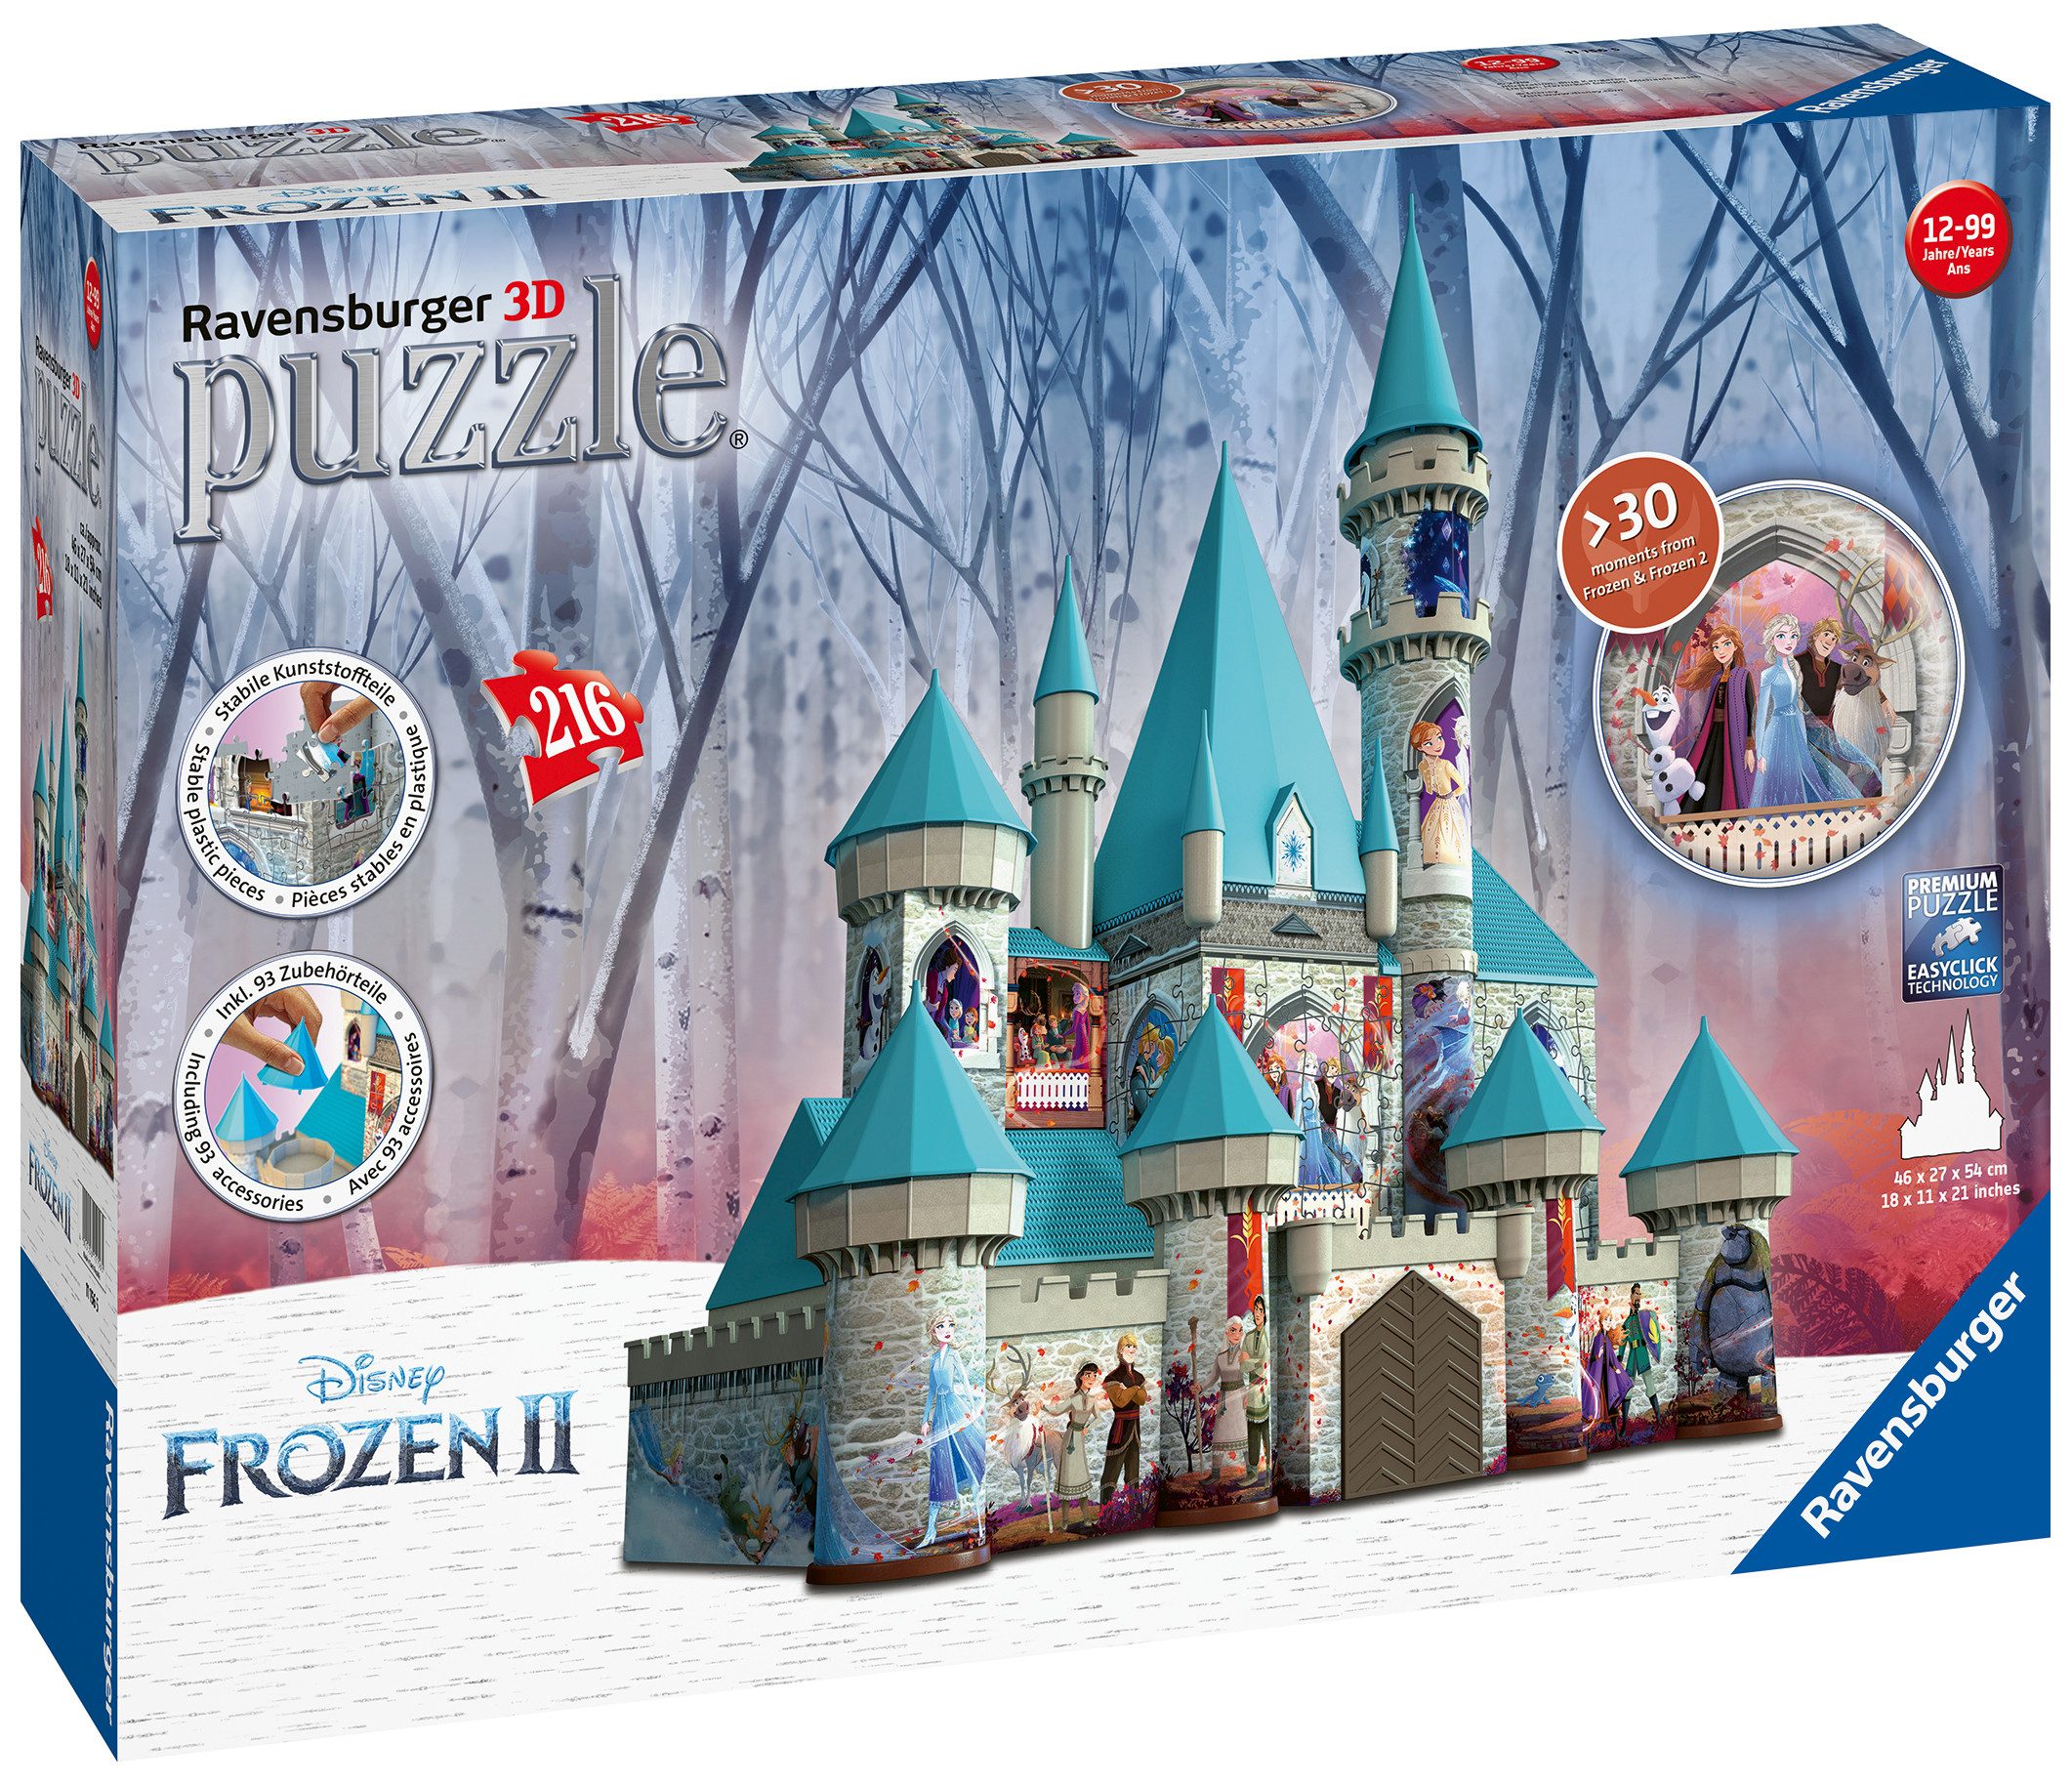 Ravensburger 3D-Puzzle Ravensburger 11156 Frozen 2 Schloss 3D Puzzle, 216 Puzzleteile, Made in Europe